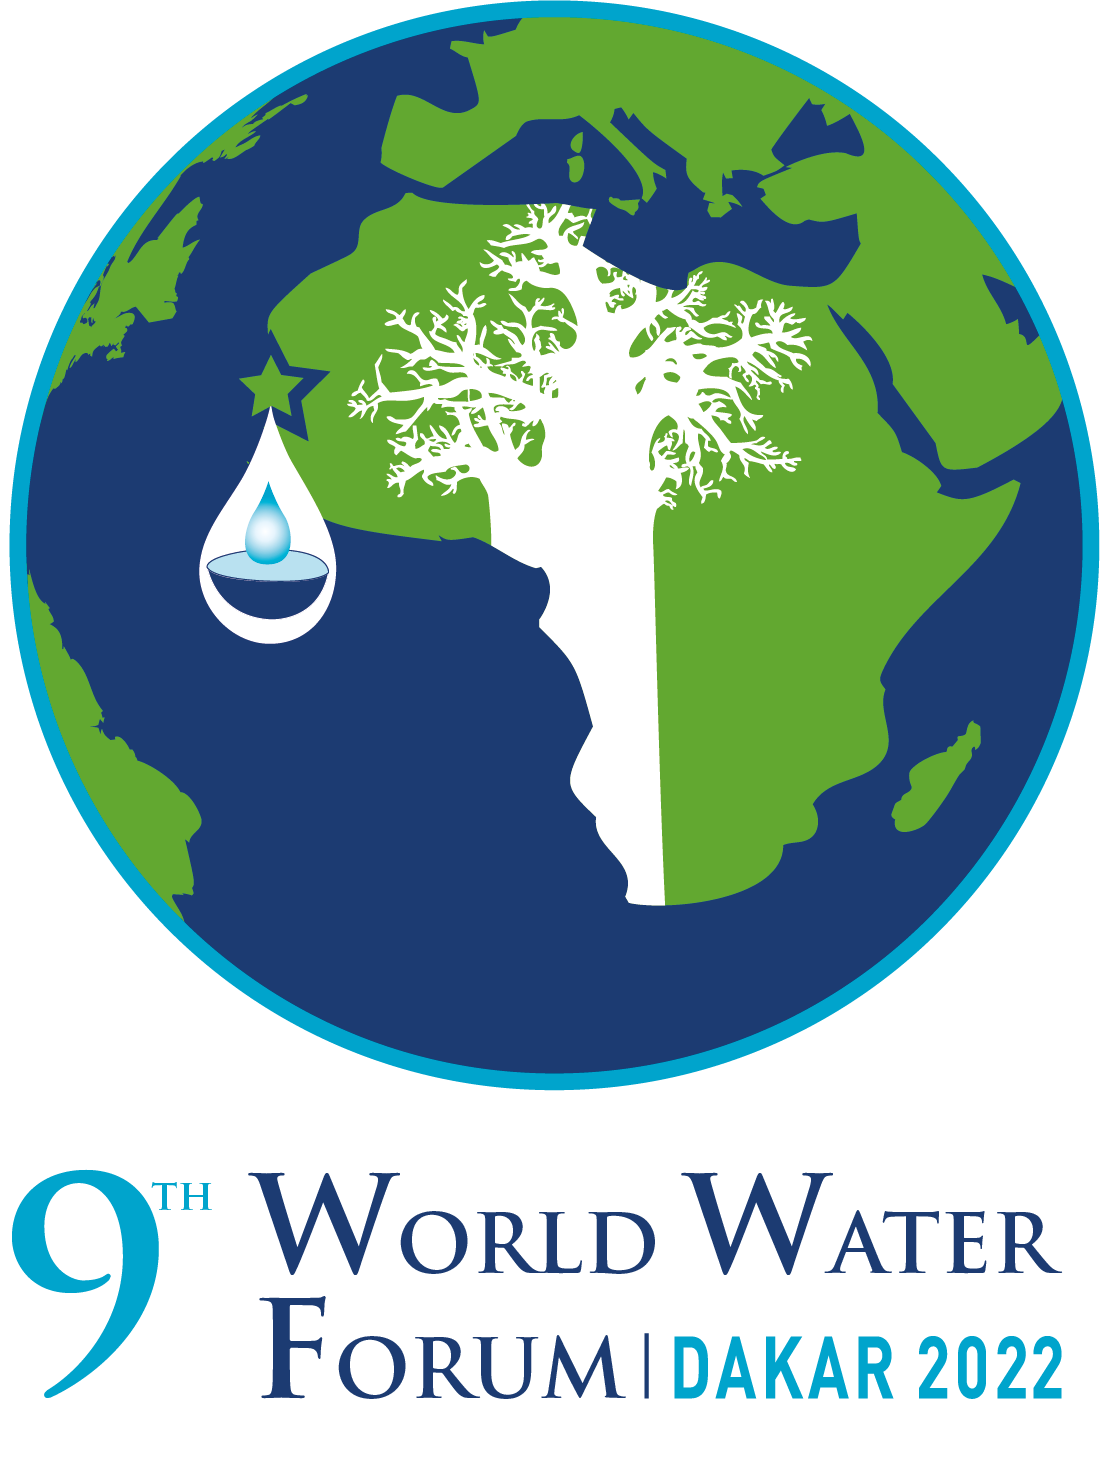 9th World Water Forum in Dakkar – March 23rd